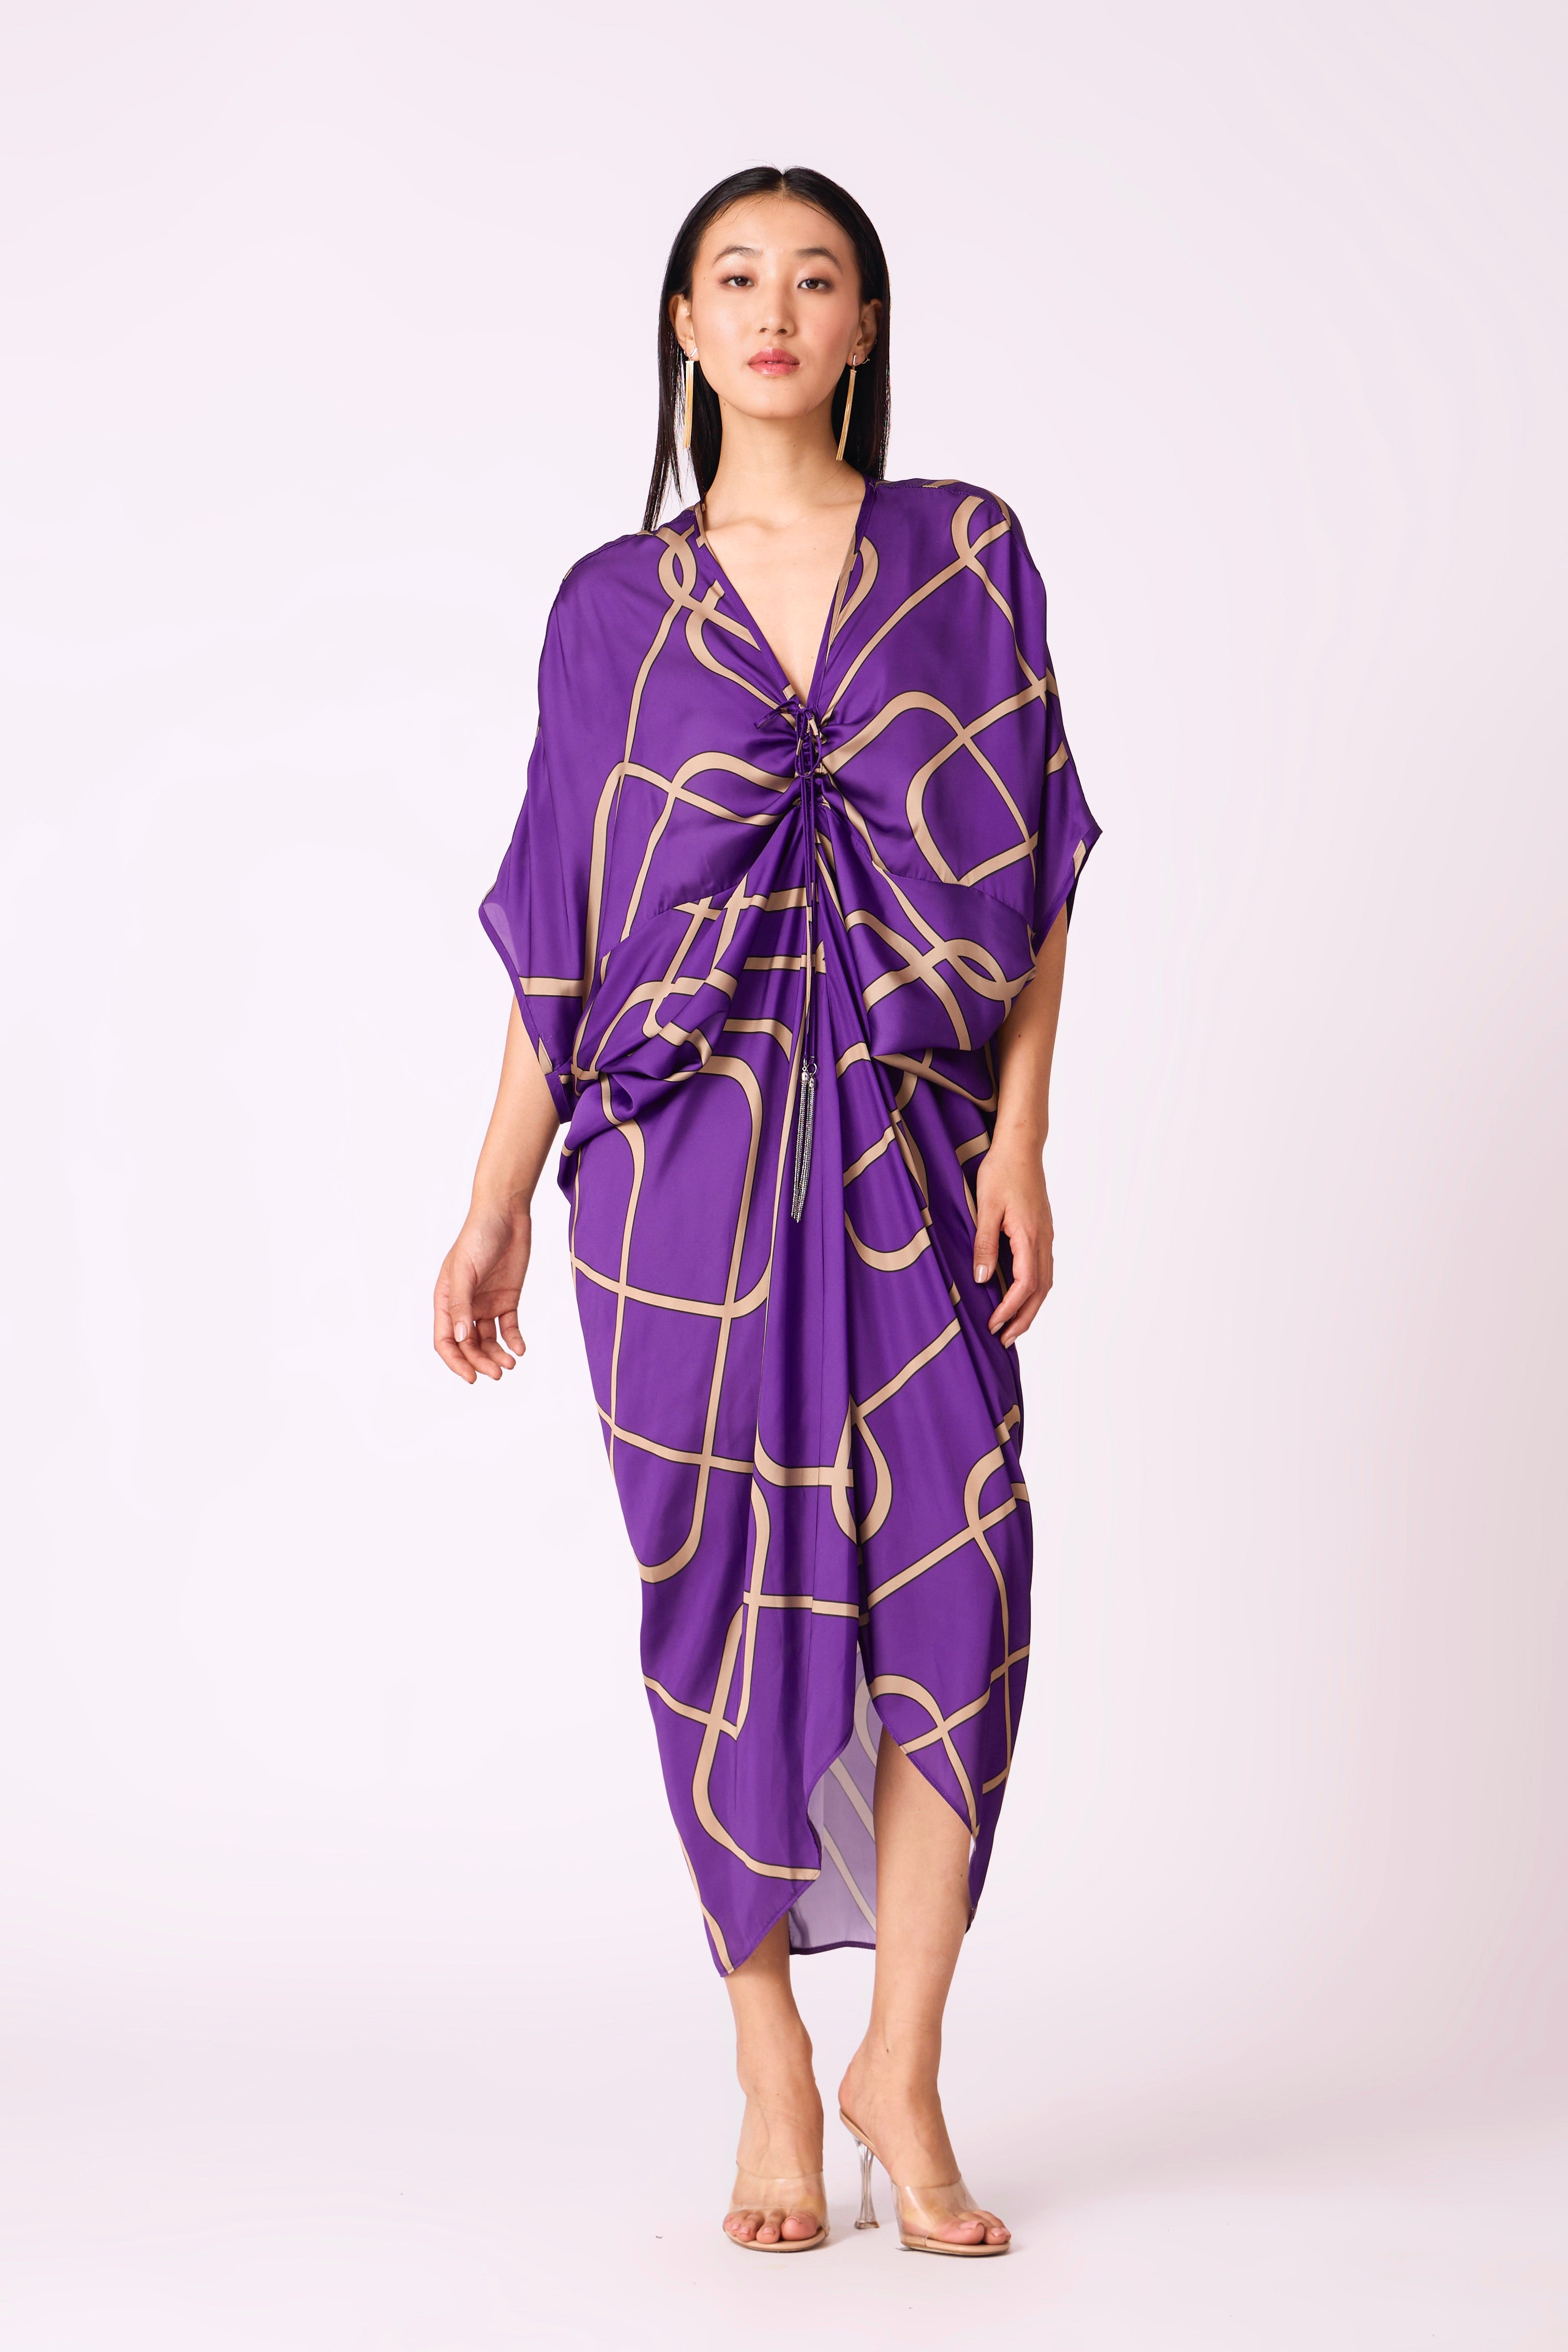 Aika Satin Print Dress - Purple & Taupe